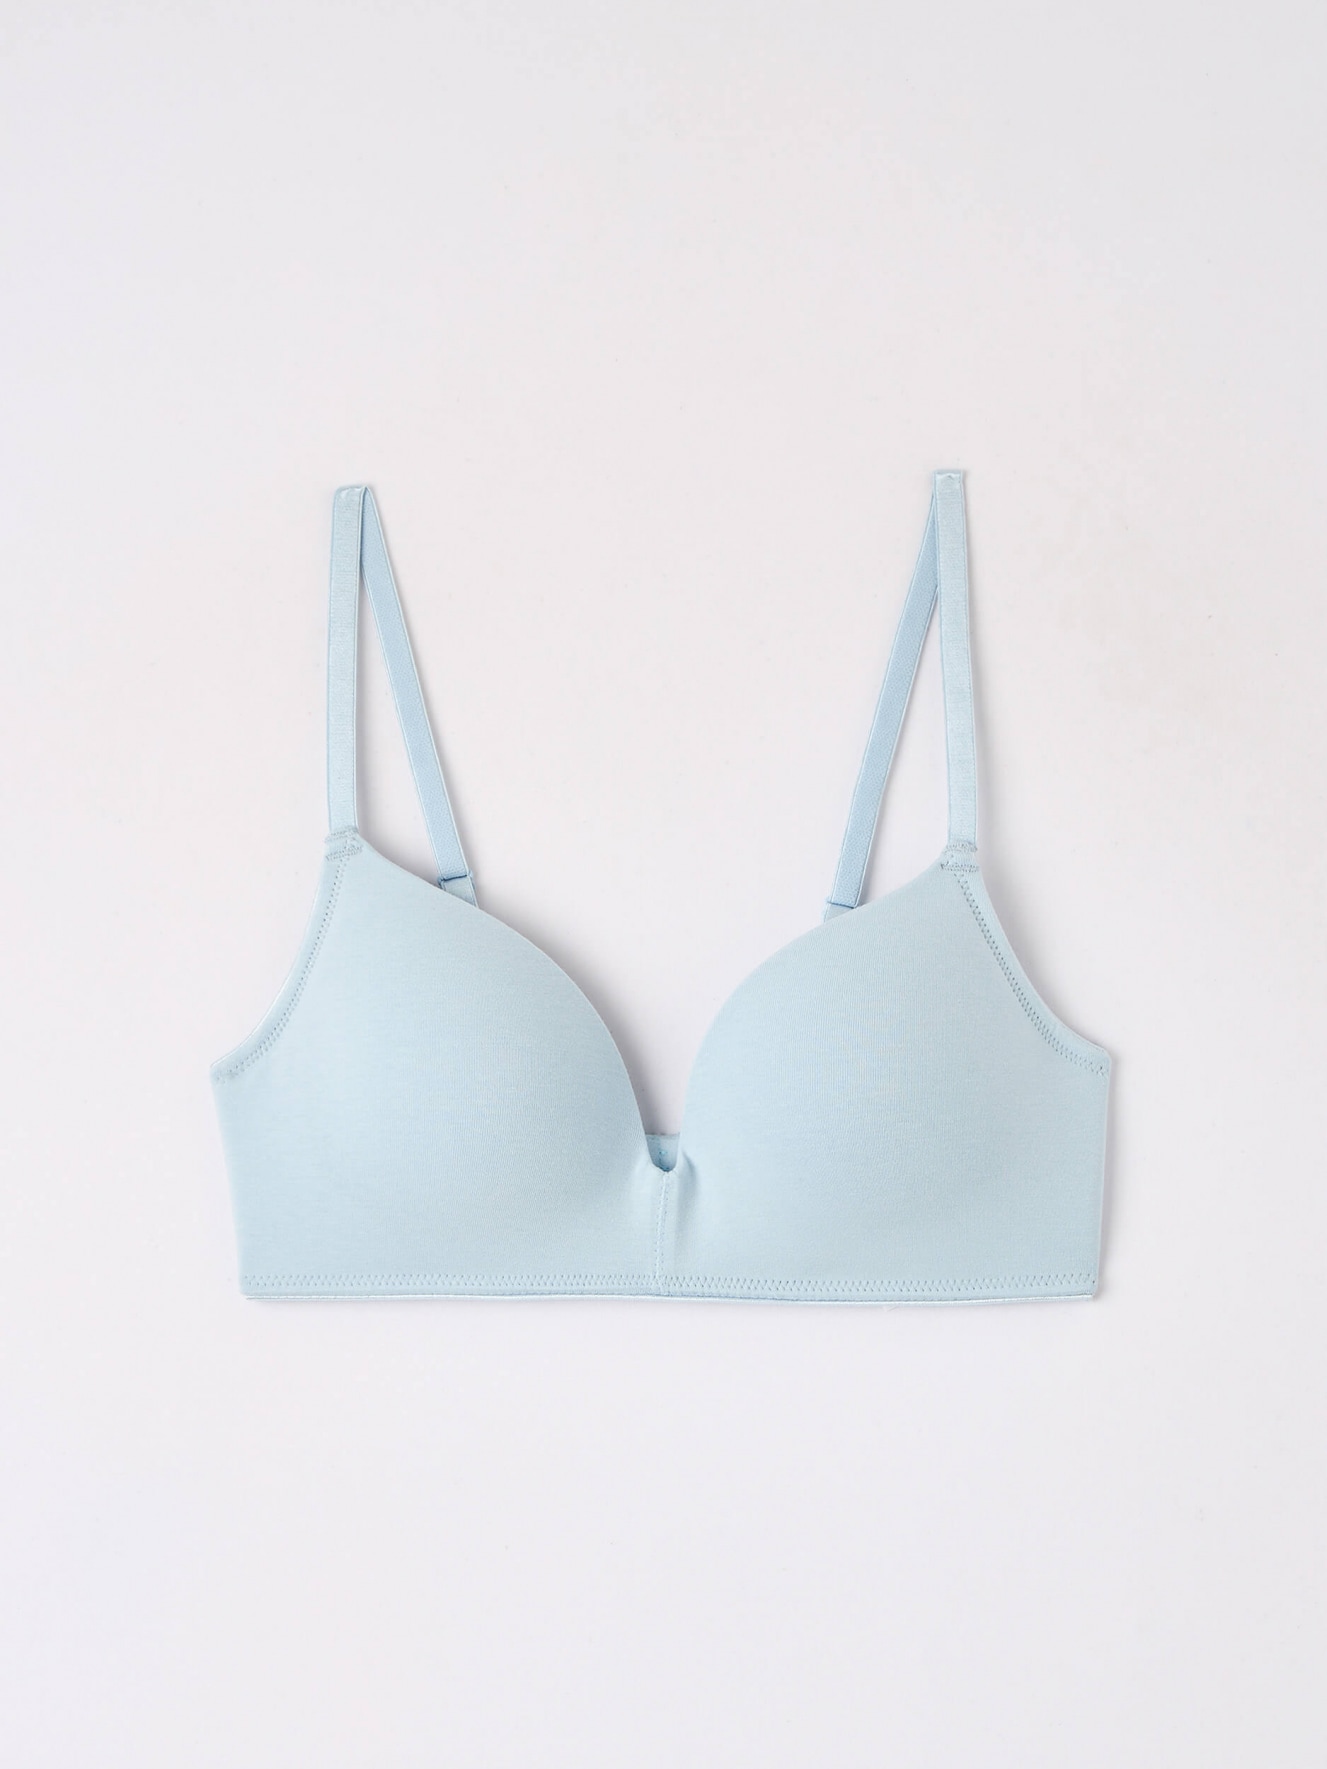 Sky-blue Cotton non-underwired triangle bra - Buy Online